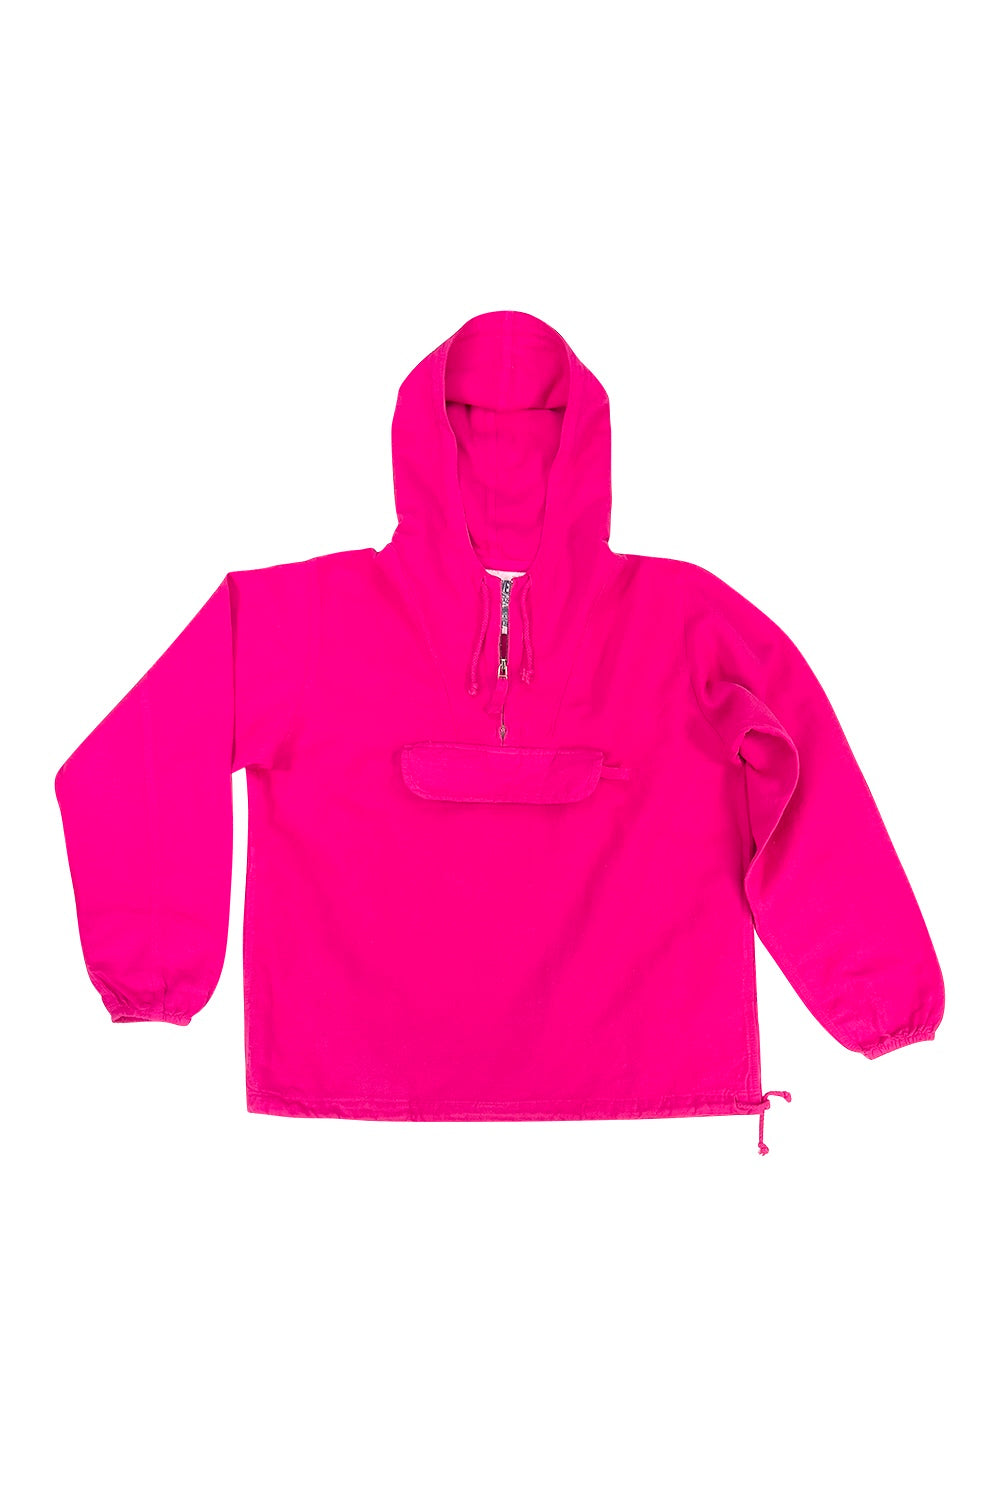 Shoreline Anorak Jacket | Jungmaven Hemp Clothing & Accessories / Color: Pink Grapefruit